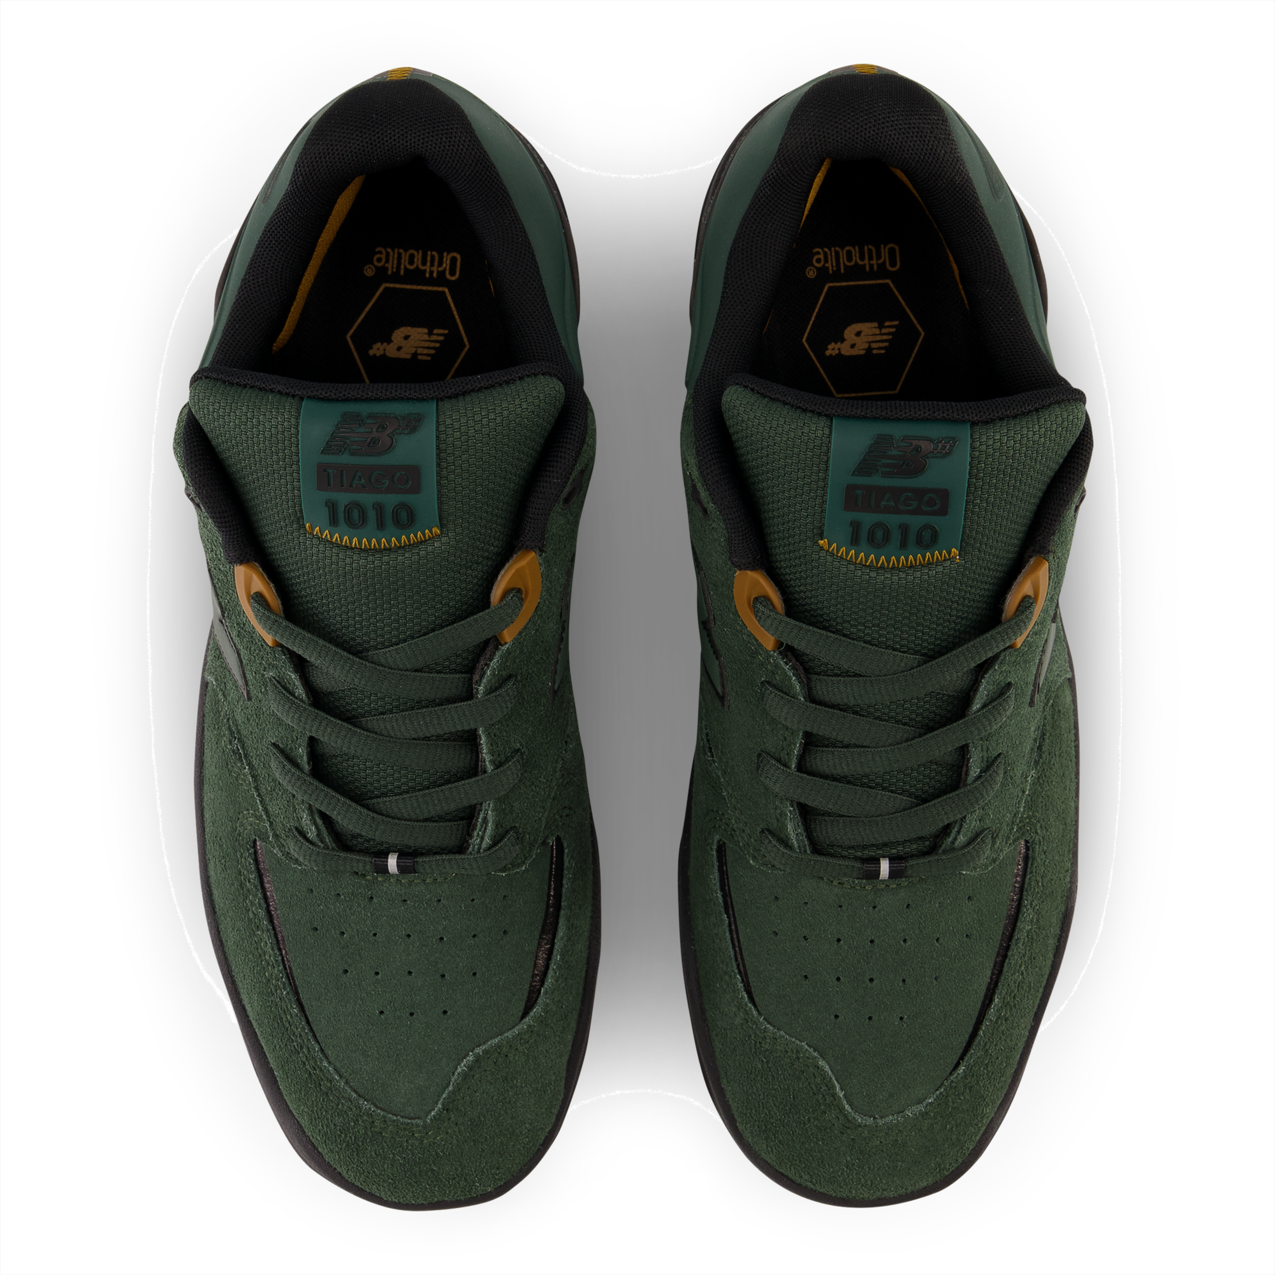 New Balance Numeric Men's Tiago Lemos 1010 Forest Green Black Shoes